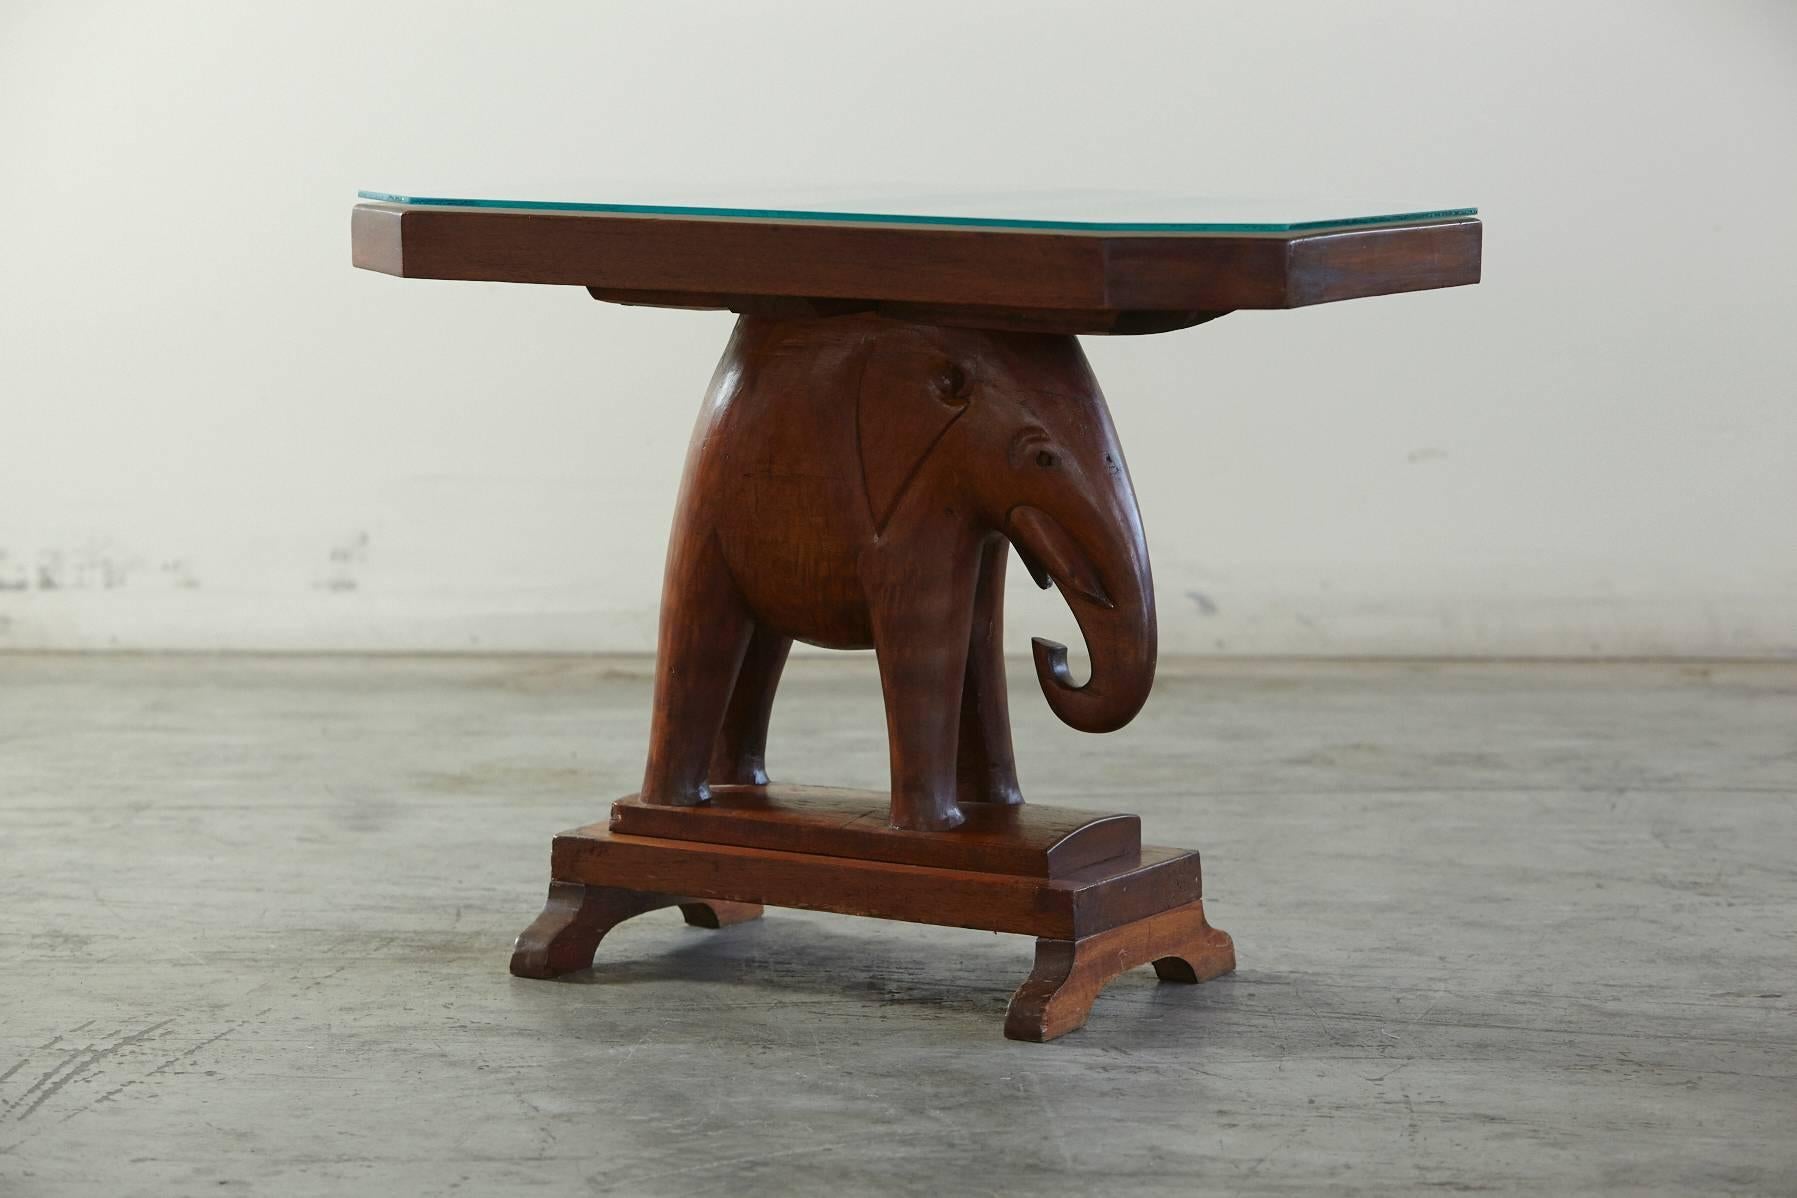 Folk Art Nigerian Mahogany End Table with Carved Elephant Base, circa 1940s